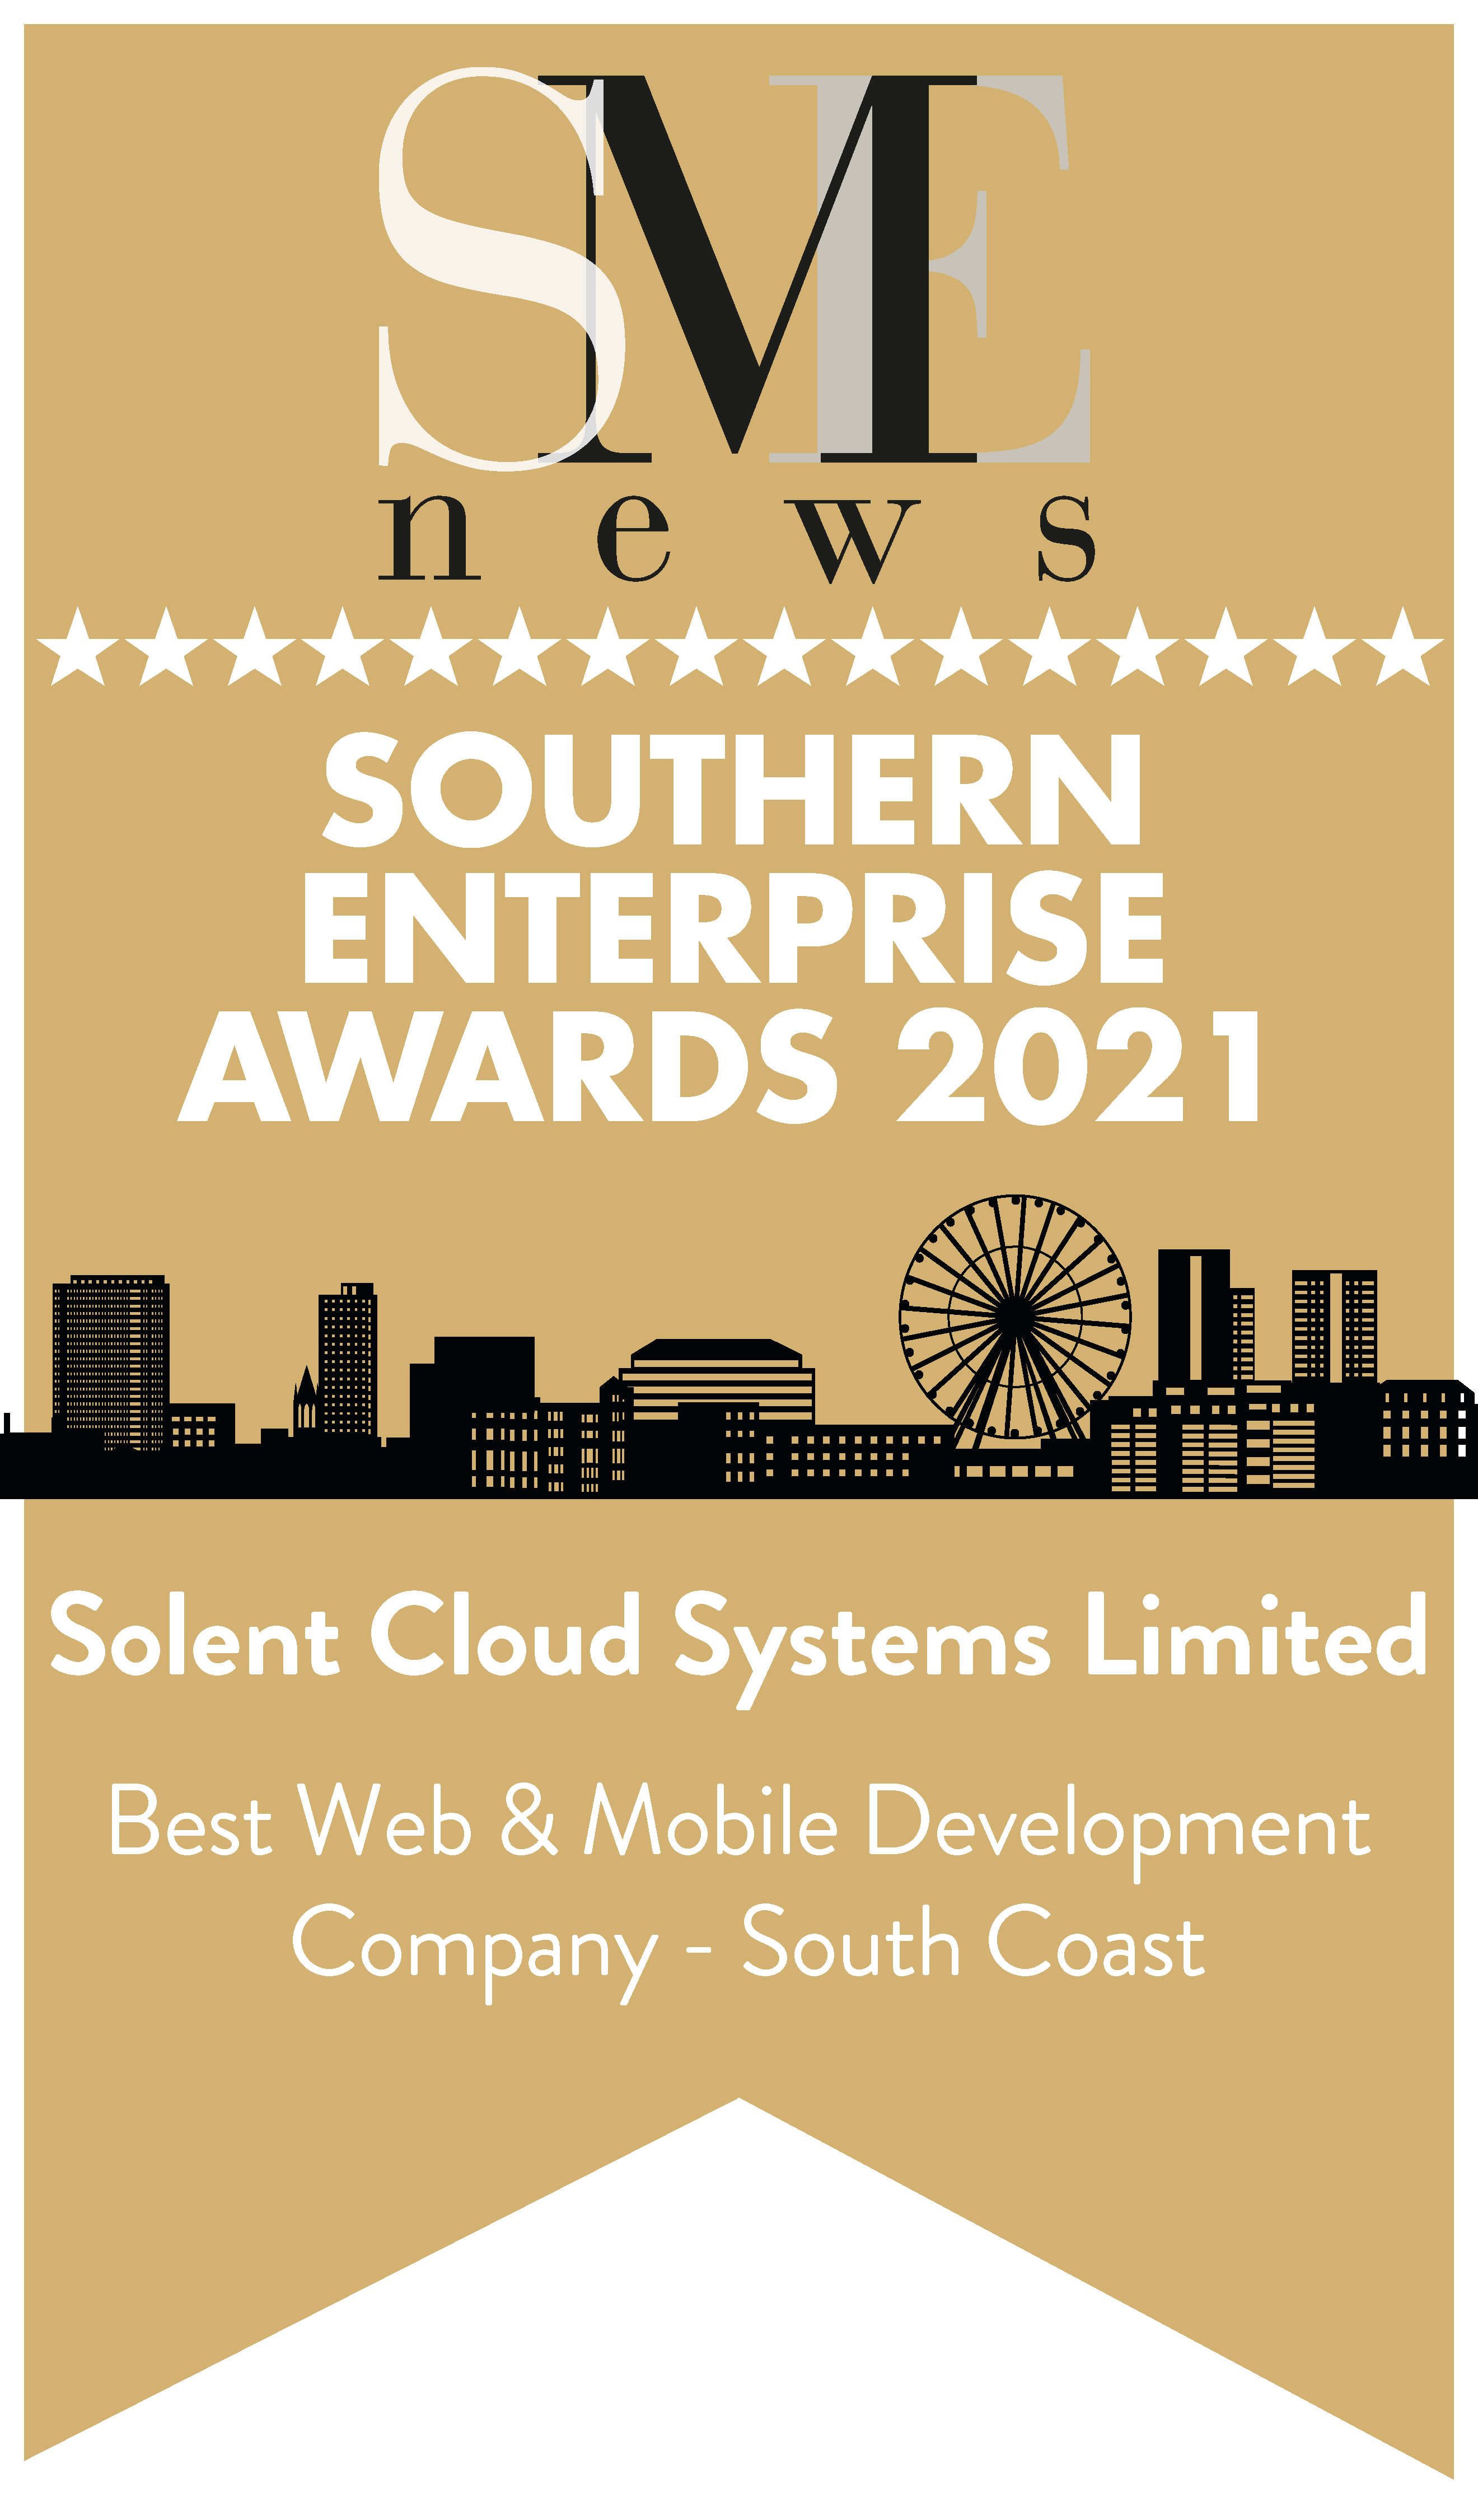 SME News Southern Enterprise Awards 2021